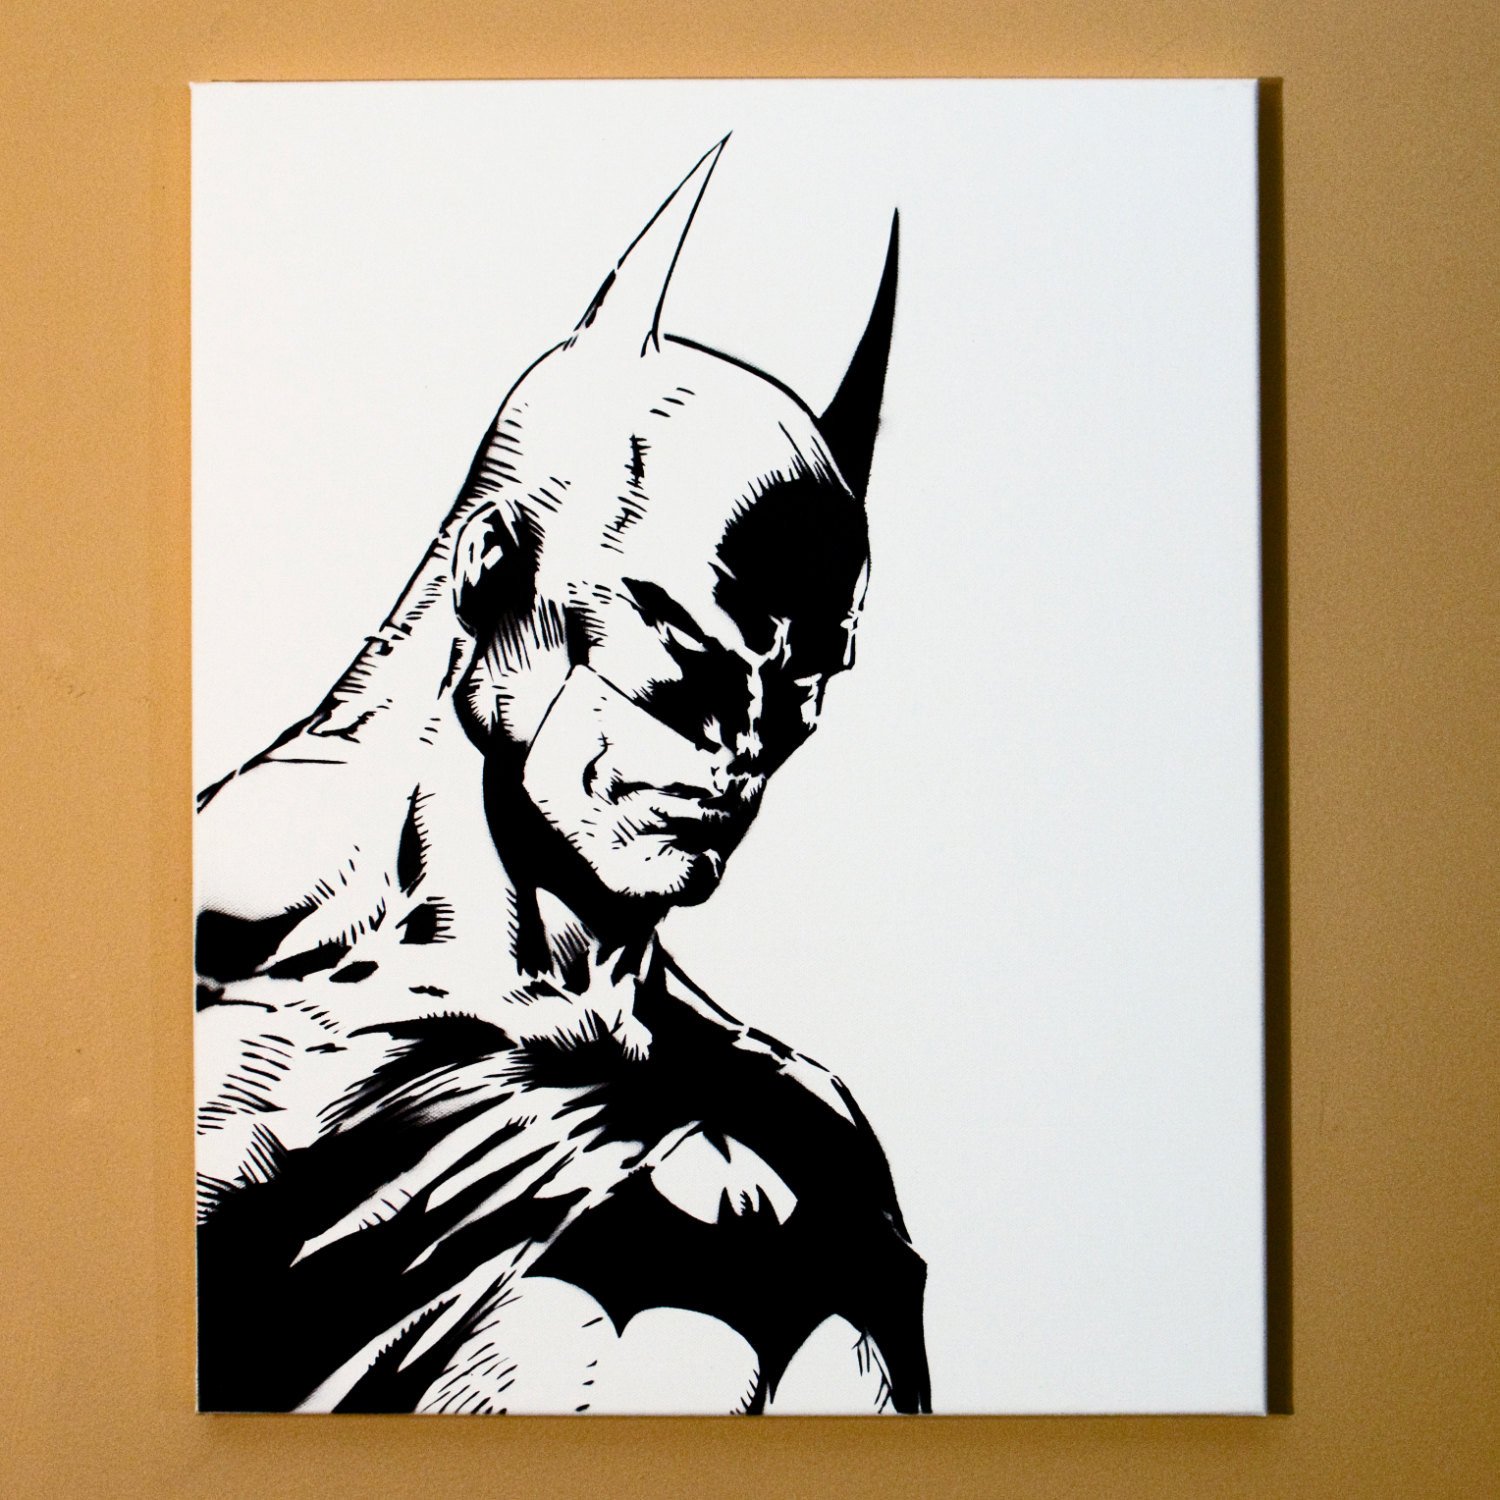 Batman Art Spray Paint from Handmade Stencil Black and